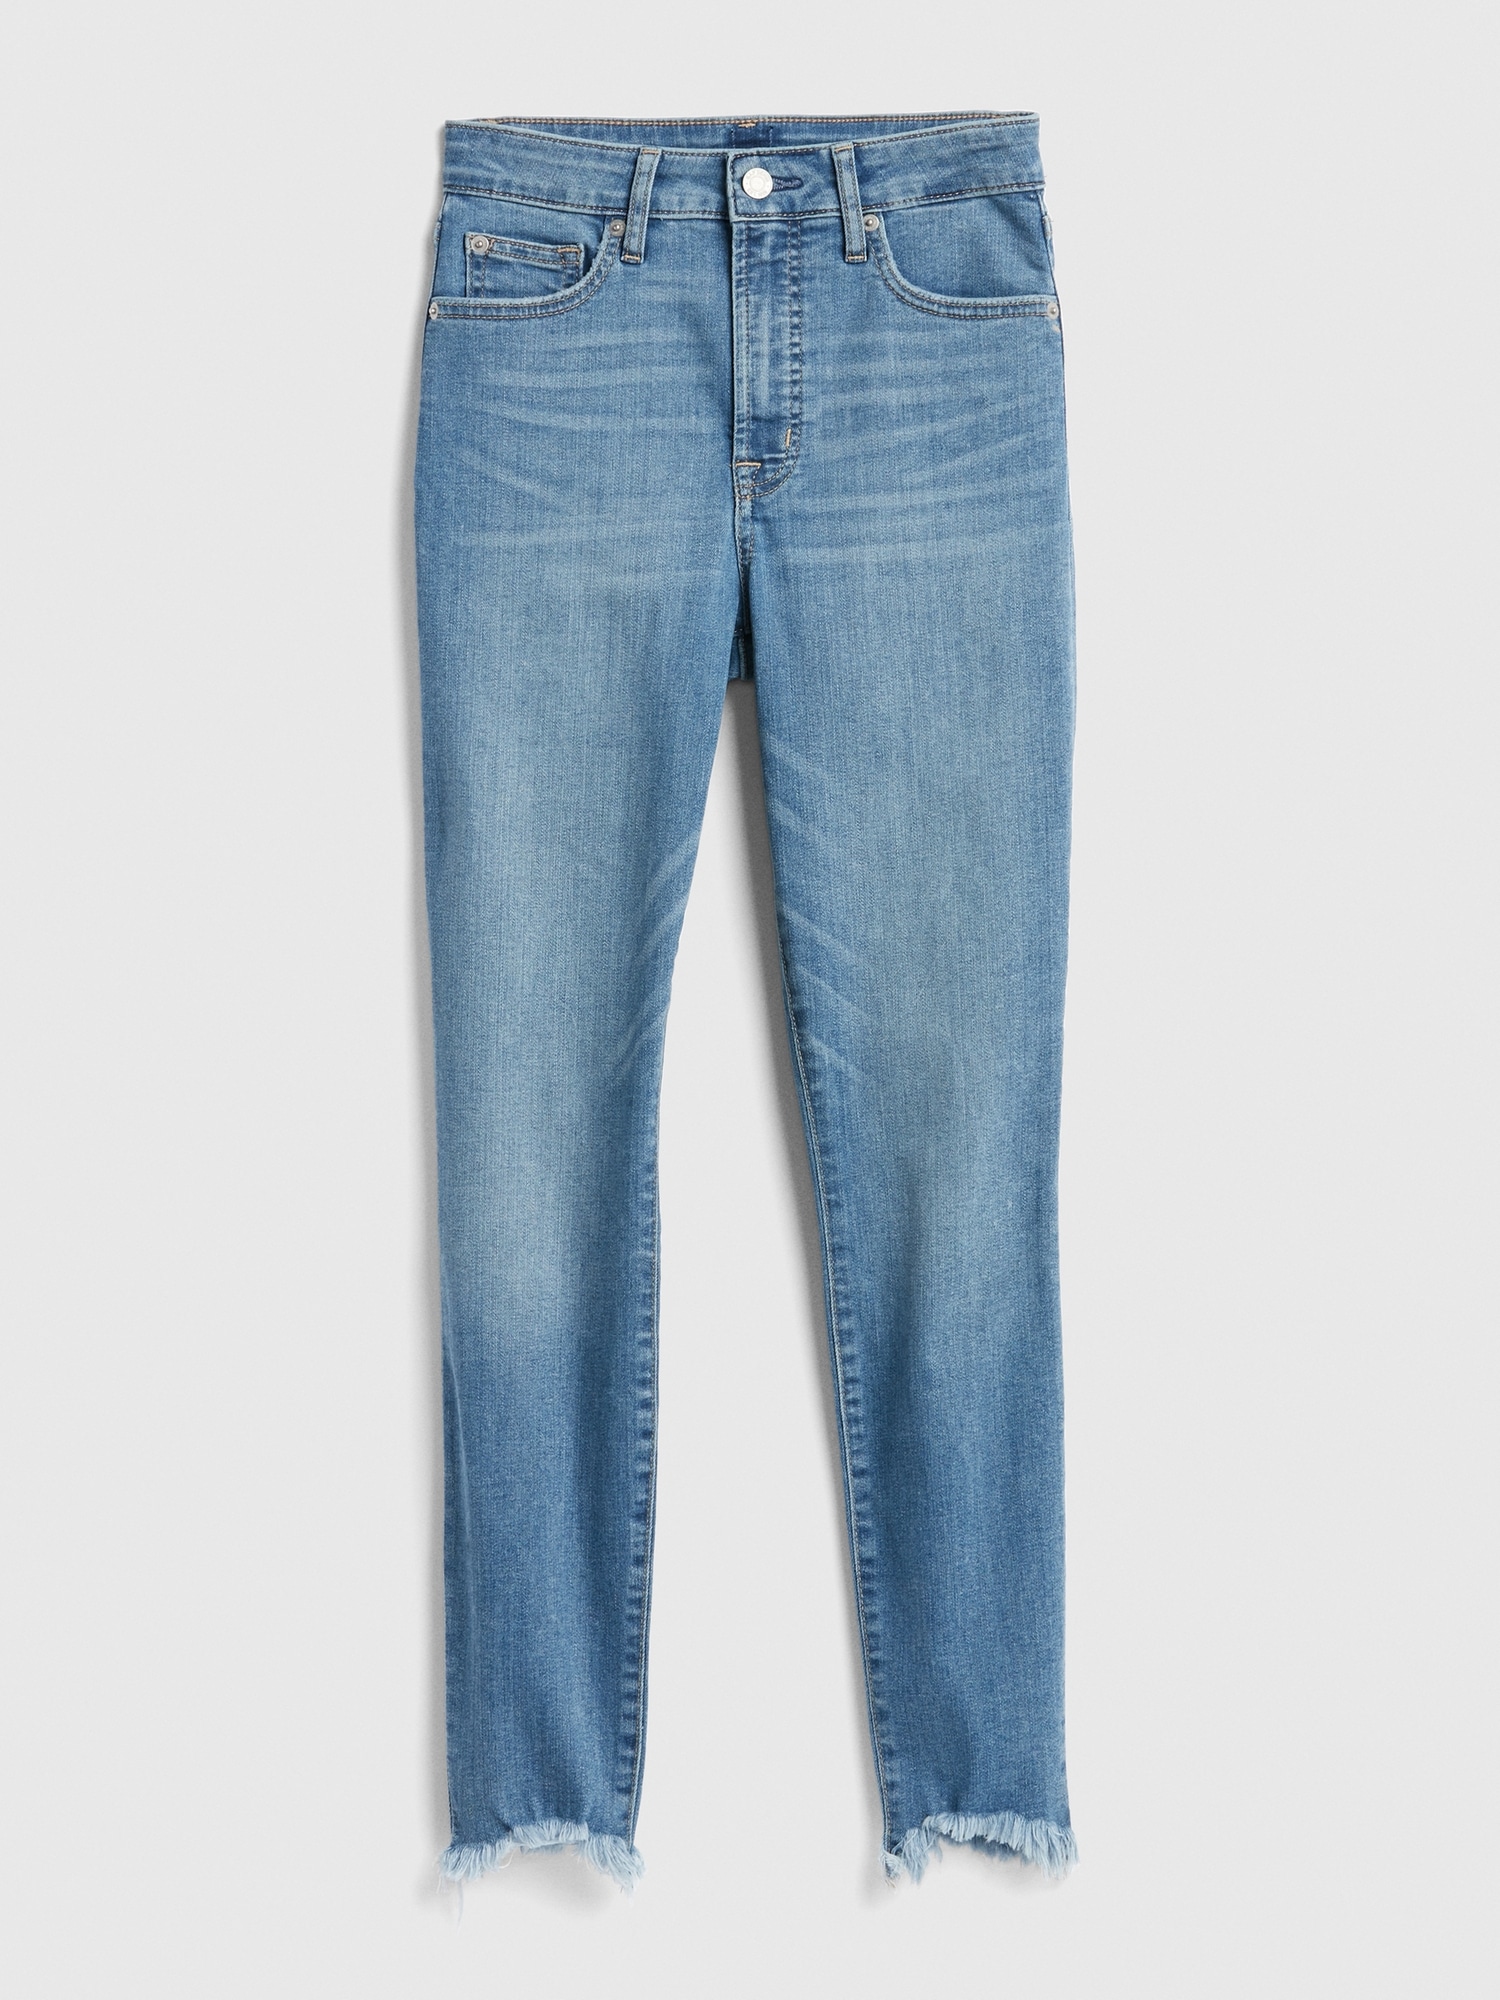 GAP uses skinny model to market 'curvy' jeans